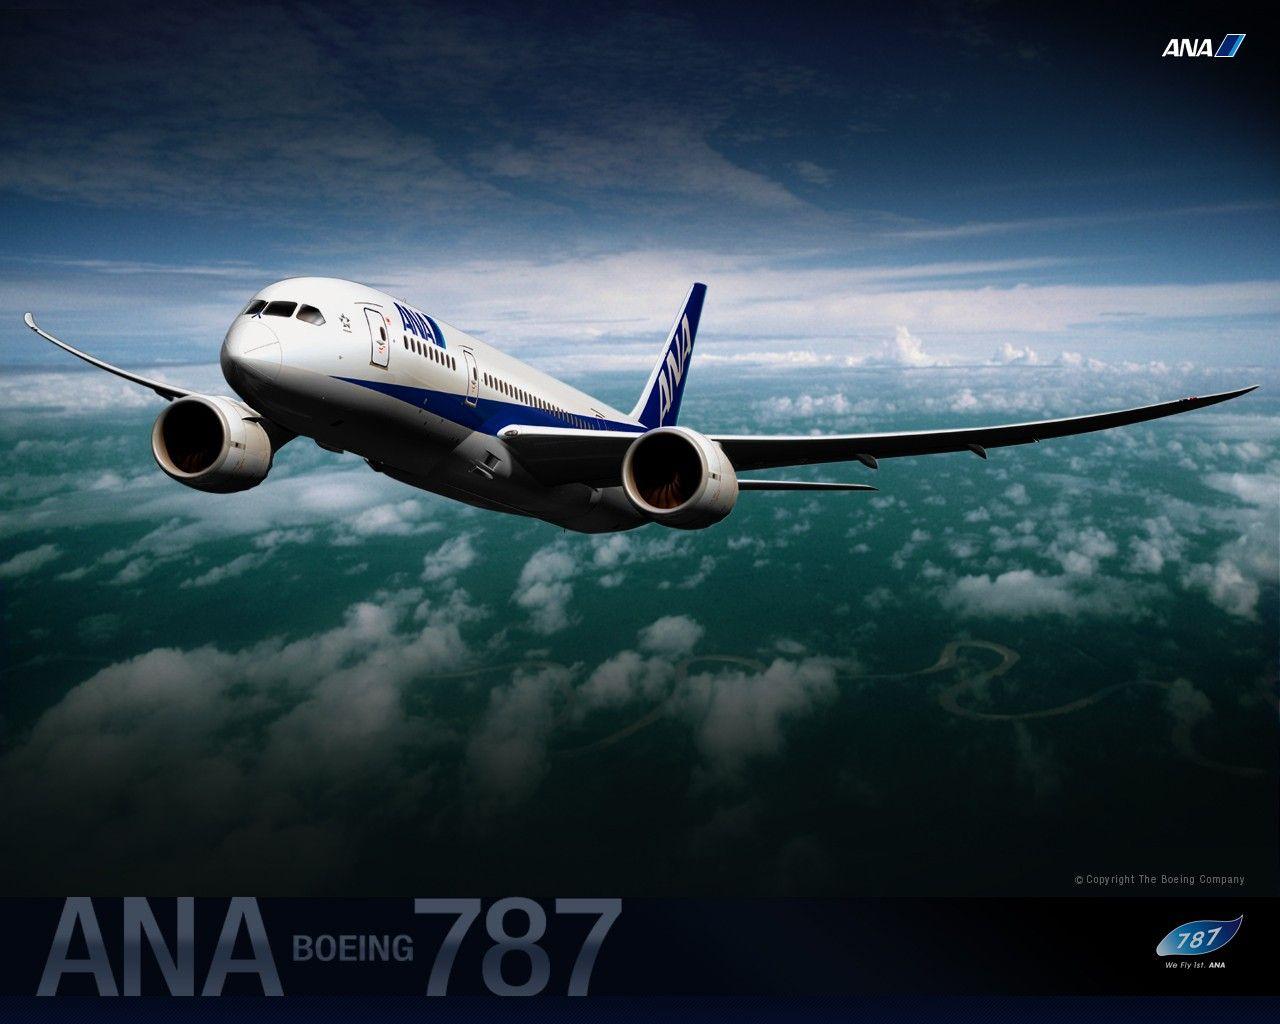 Boeing 787 Wallpaper Image